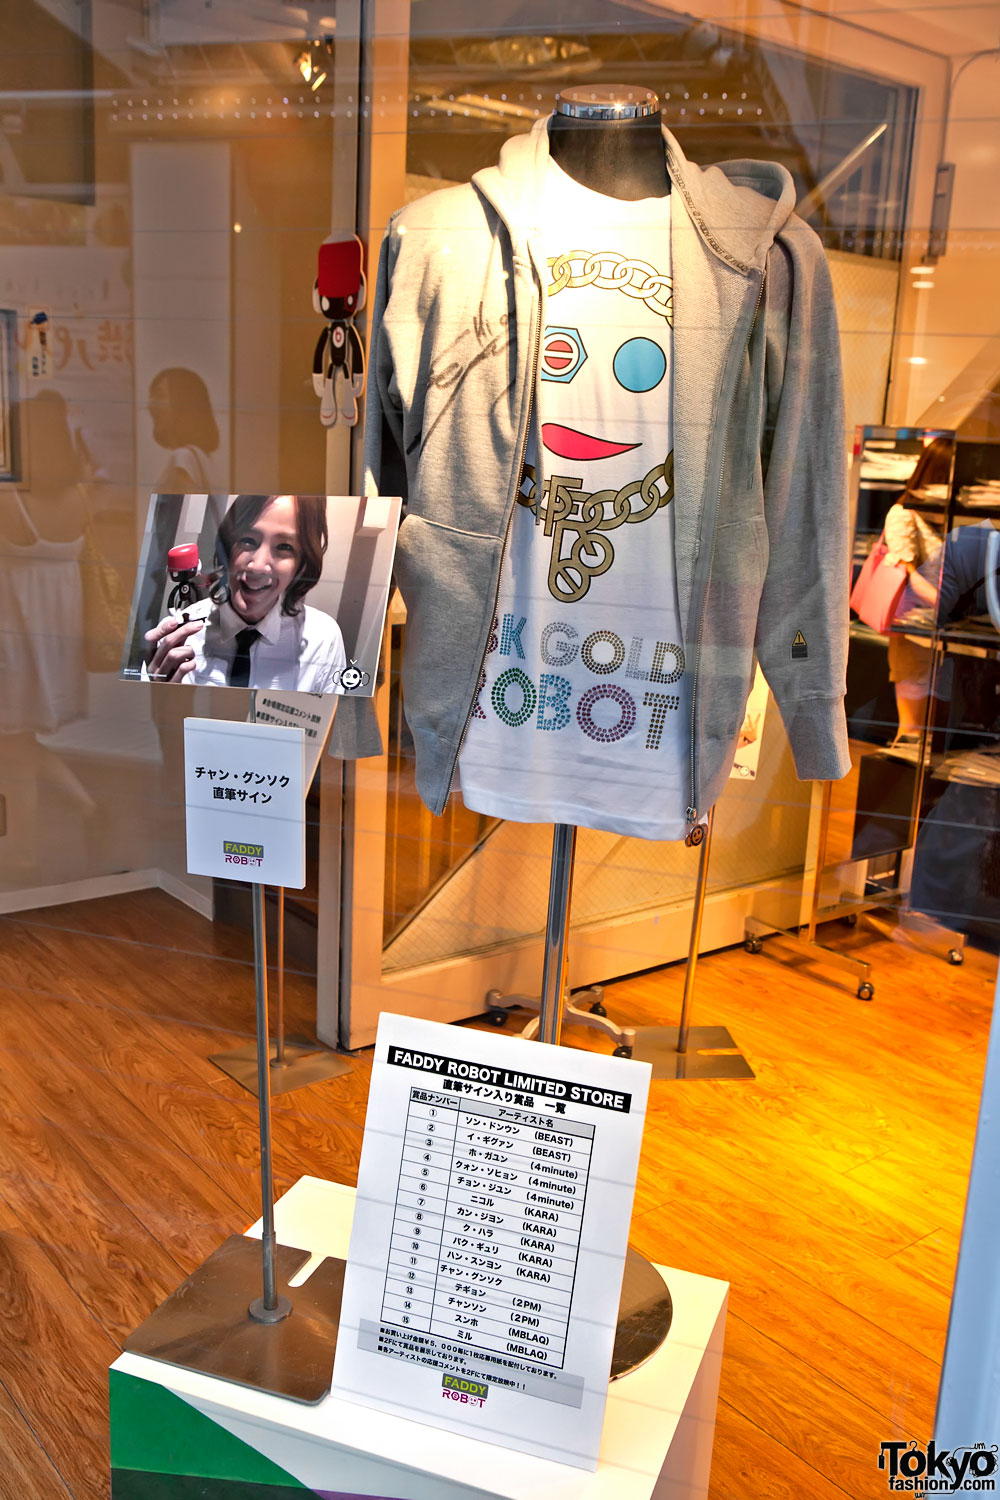 Faddy Robot Shibuya Popup Shop – Korean Fashion Brand x K-Pop in Tokyo